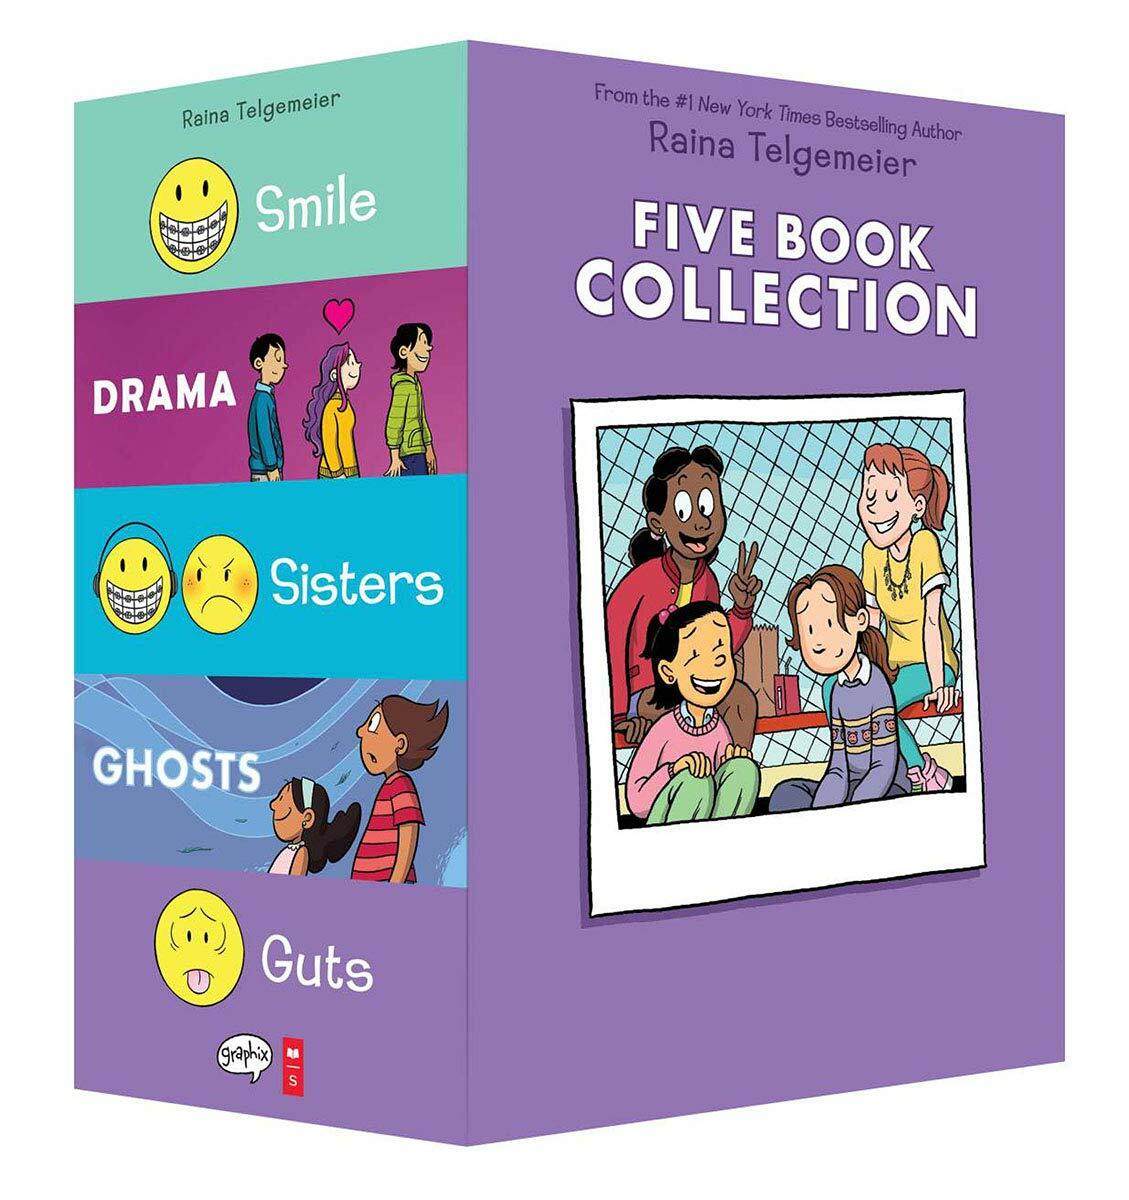 Raina Telgemeier Collection Box Set (Smile, Drama, Sisters, Ghosts, Guts) (Boxed Set)